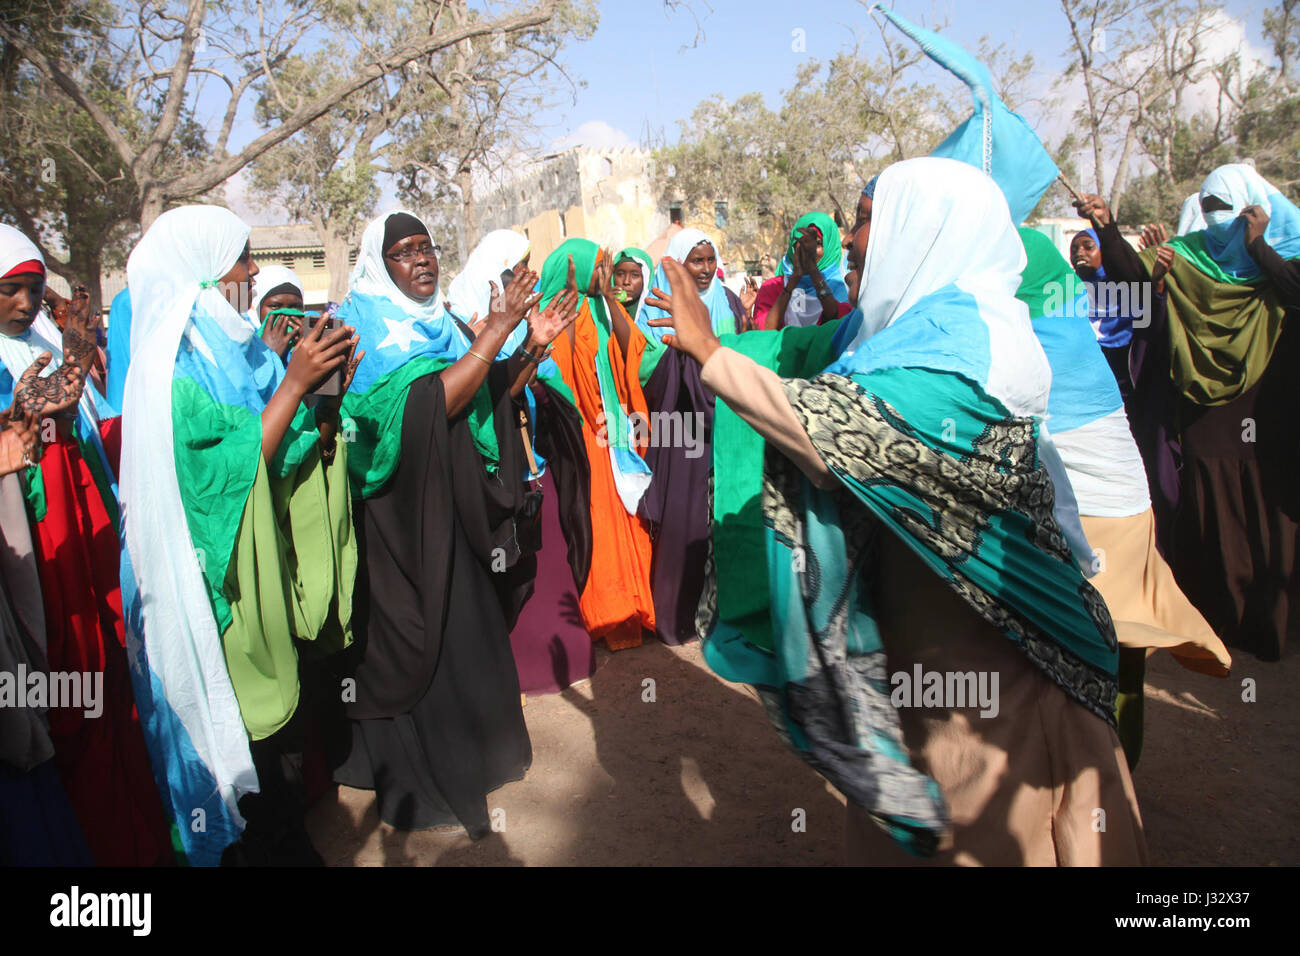 Residents of Kismayo, Somalia attend celebrations to mark International Women's Day on March 8, 2017. AMISOM Photo / Awil Abukar Stock Photo